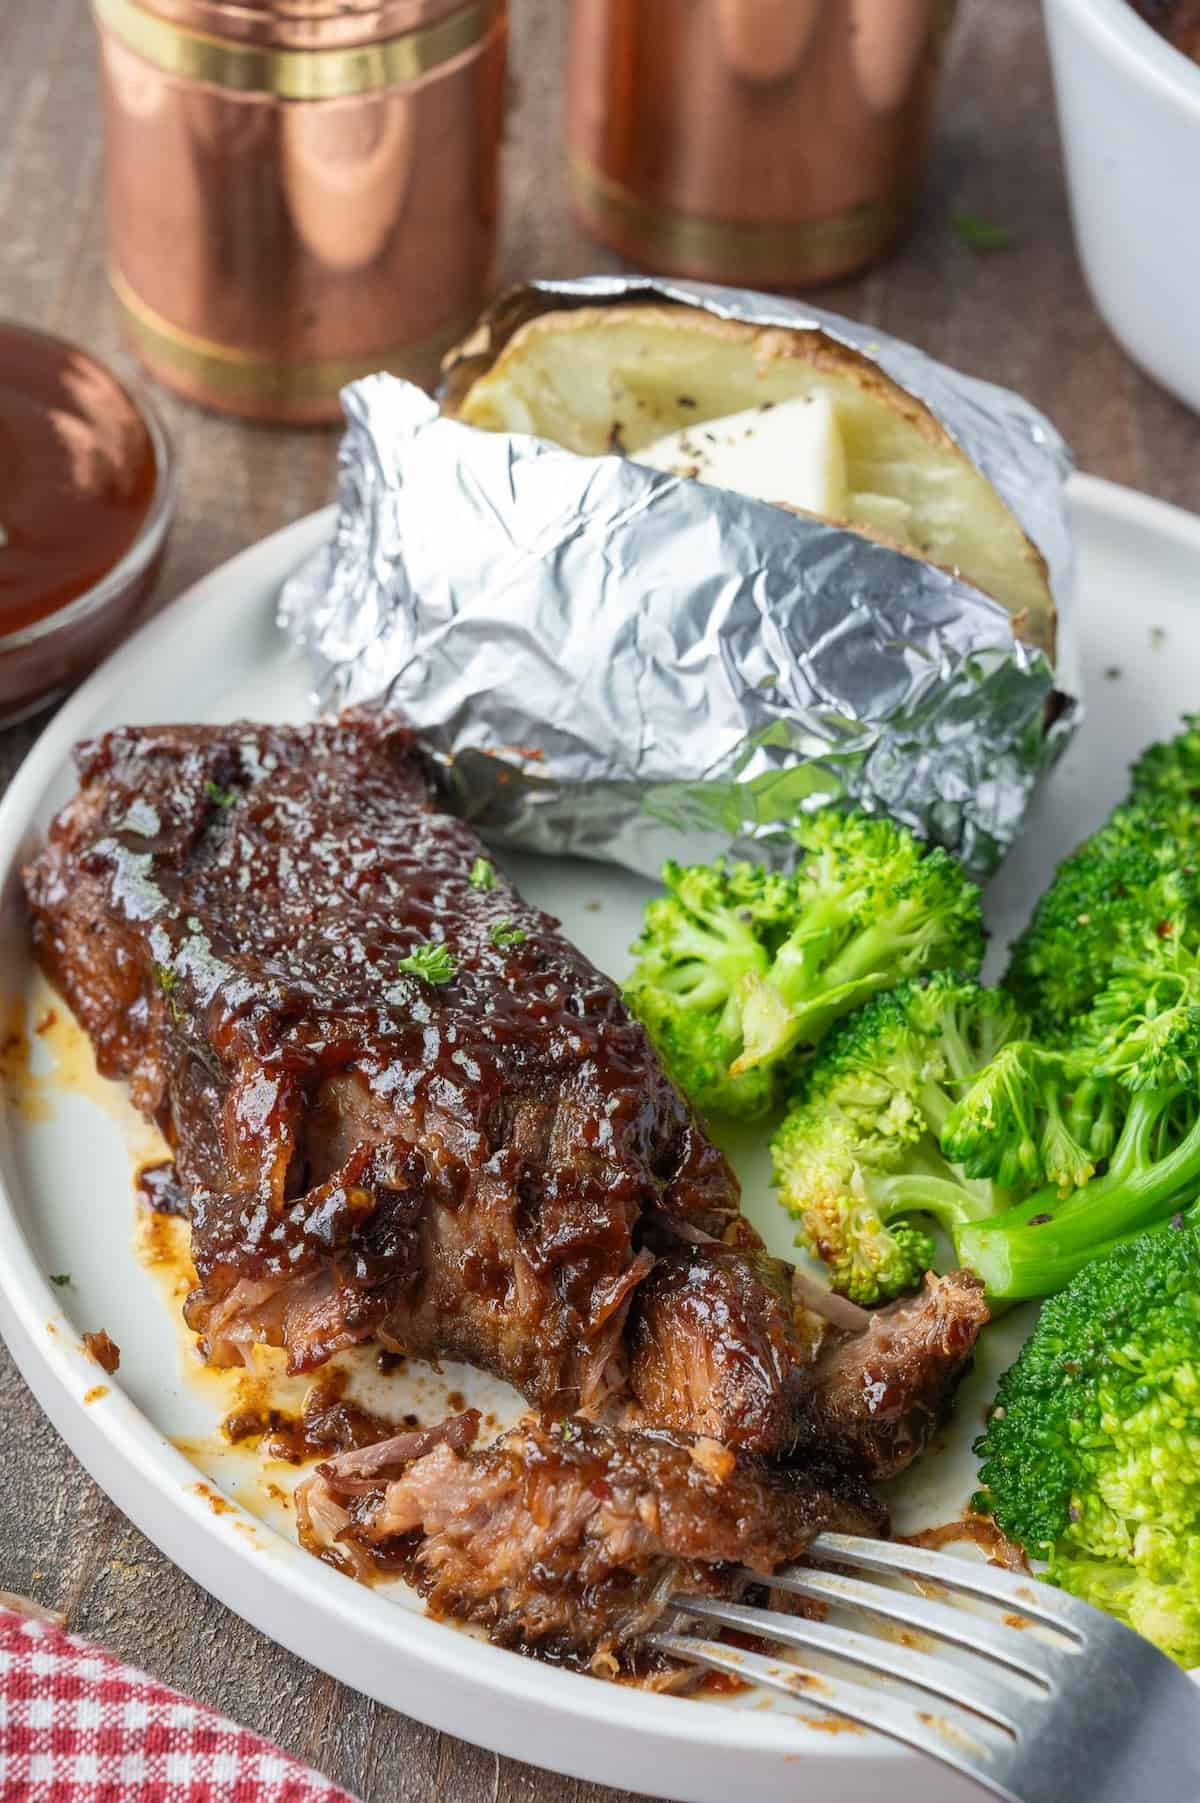 Boneless beef rib on a plate with potato and broccoli.